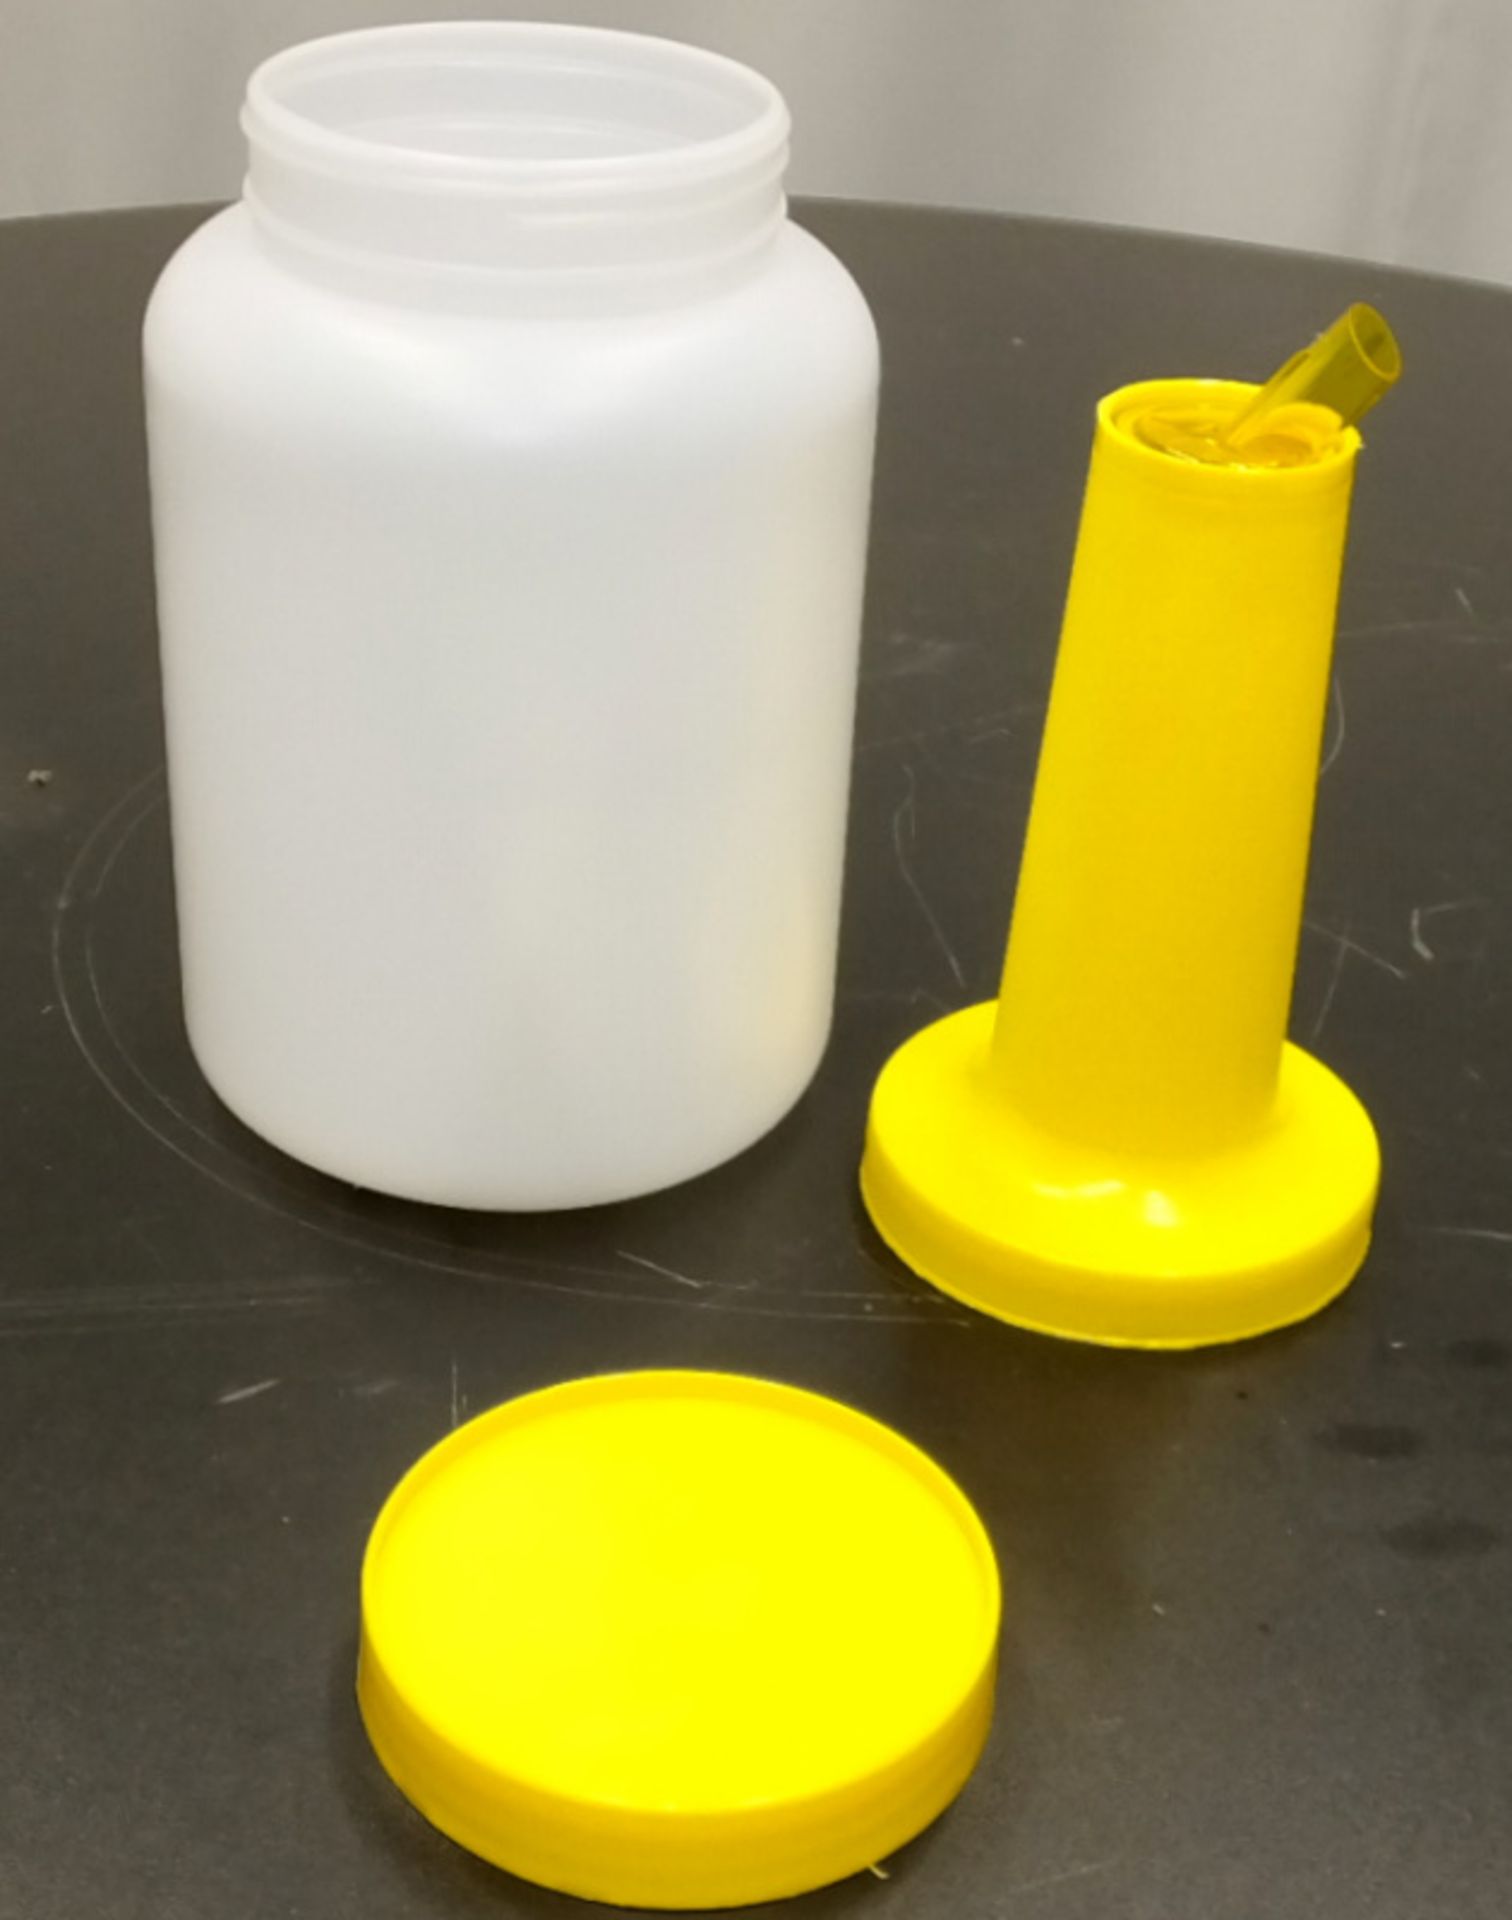 Save n Serve Pro bottles 1/2 gallon yellow - 6 per box - 12 boxes - Image 2 of 2